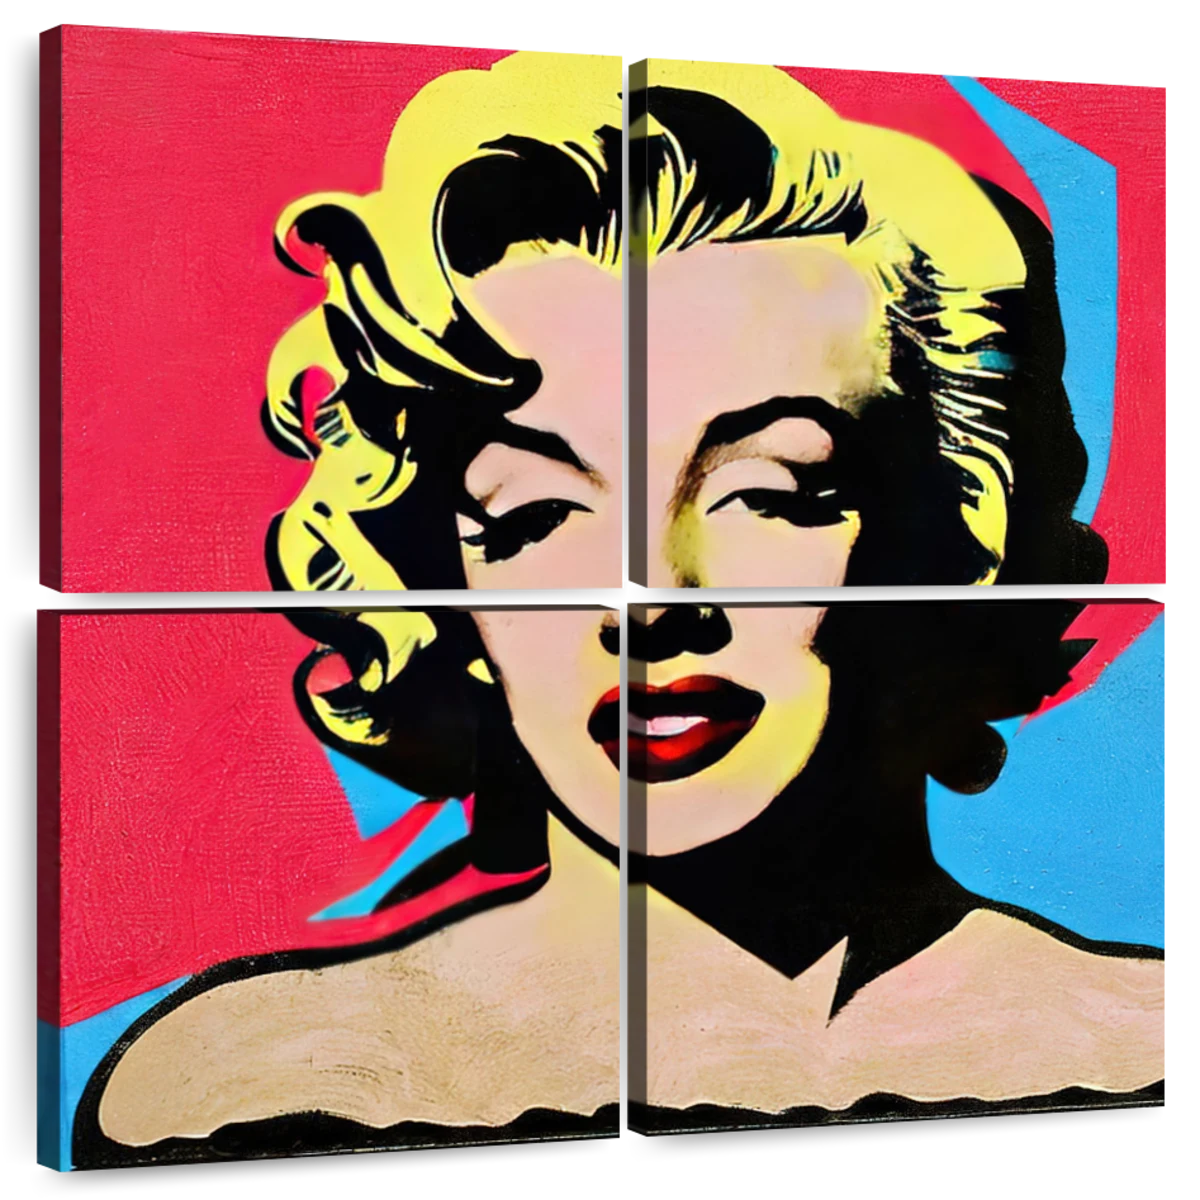 Marilyn Monroe Art Print and Neon – Luxury Sign Miami